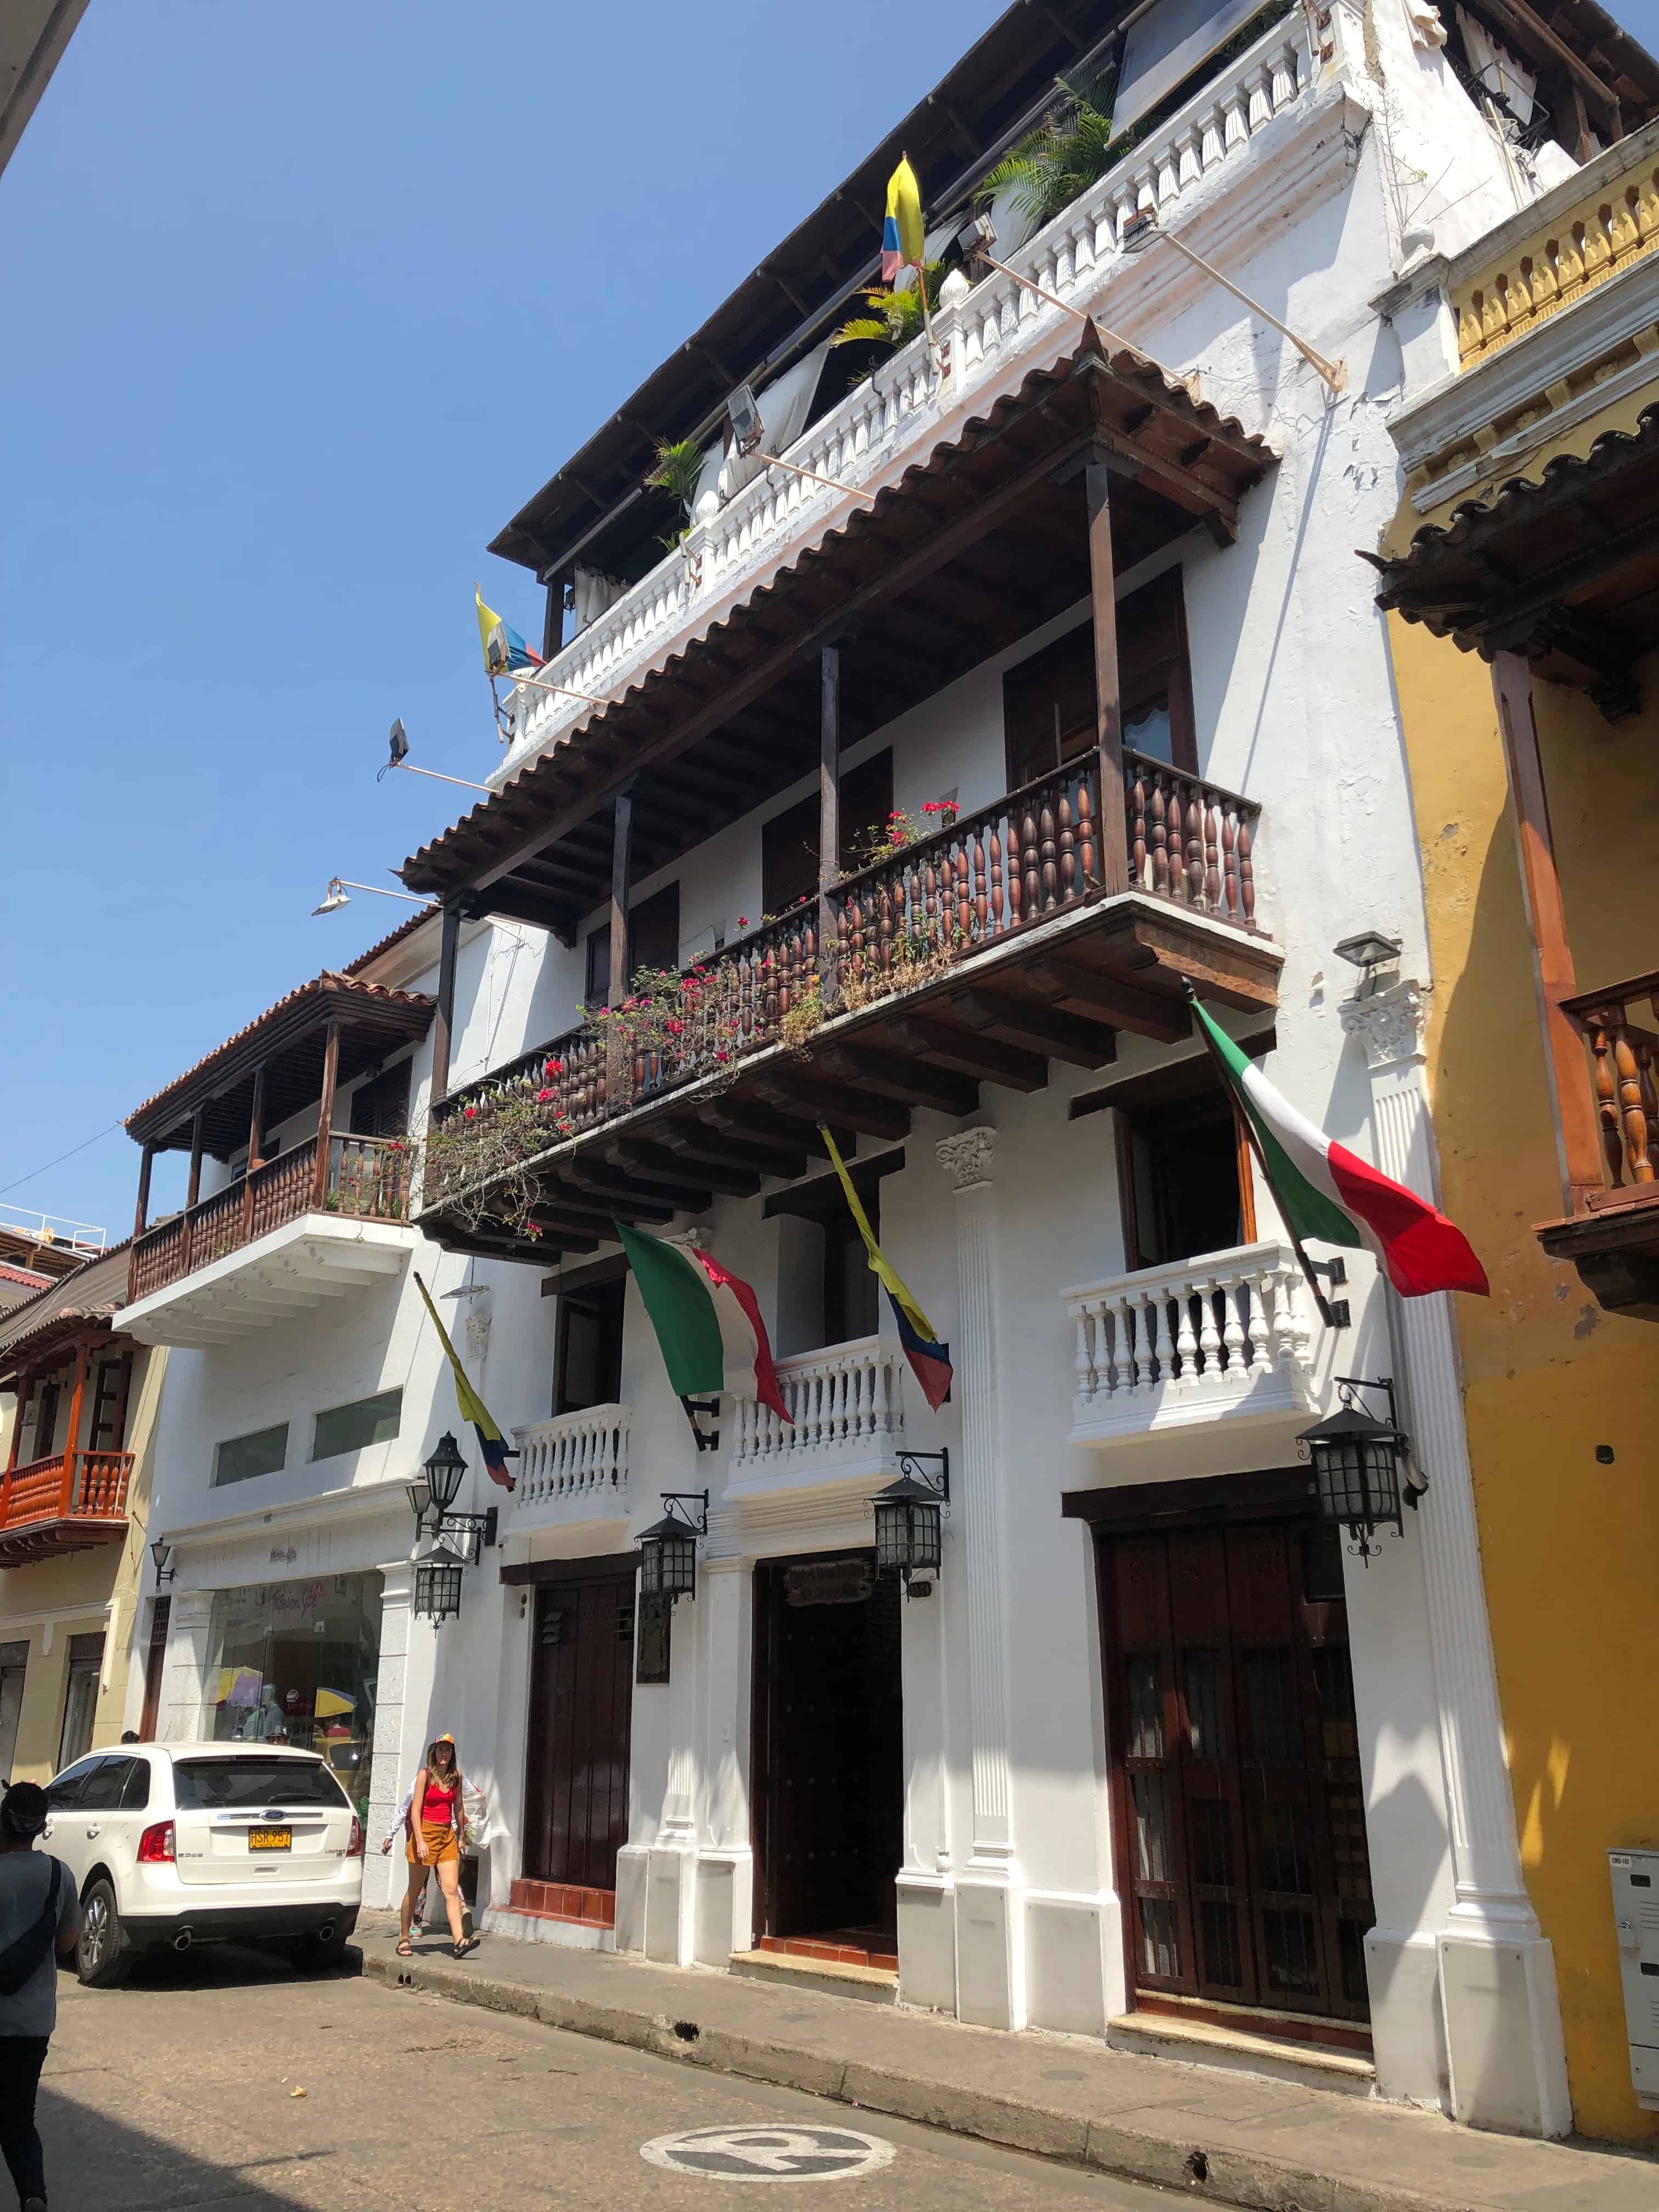 Hotel Don Pedro de Heredia in Cartagena, Colombia